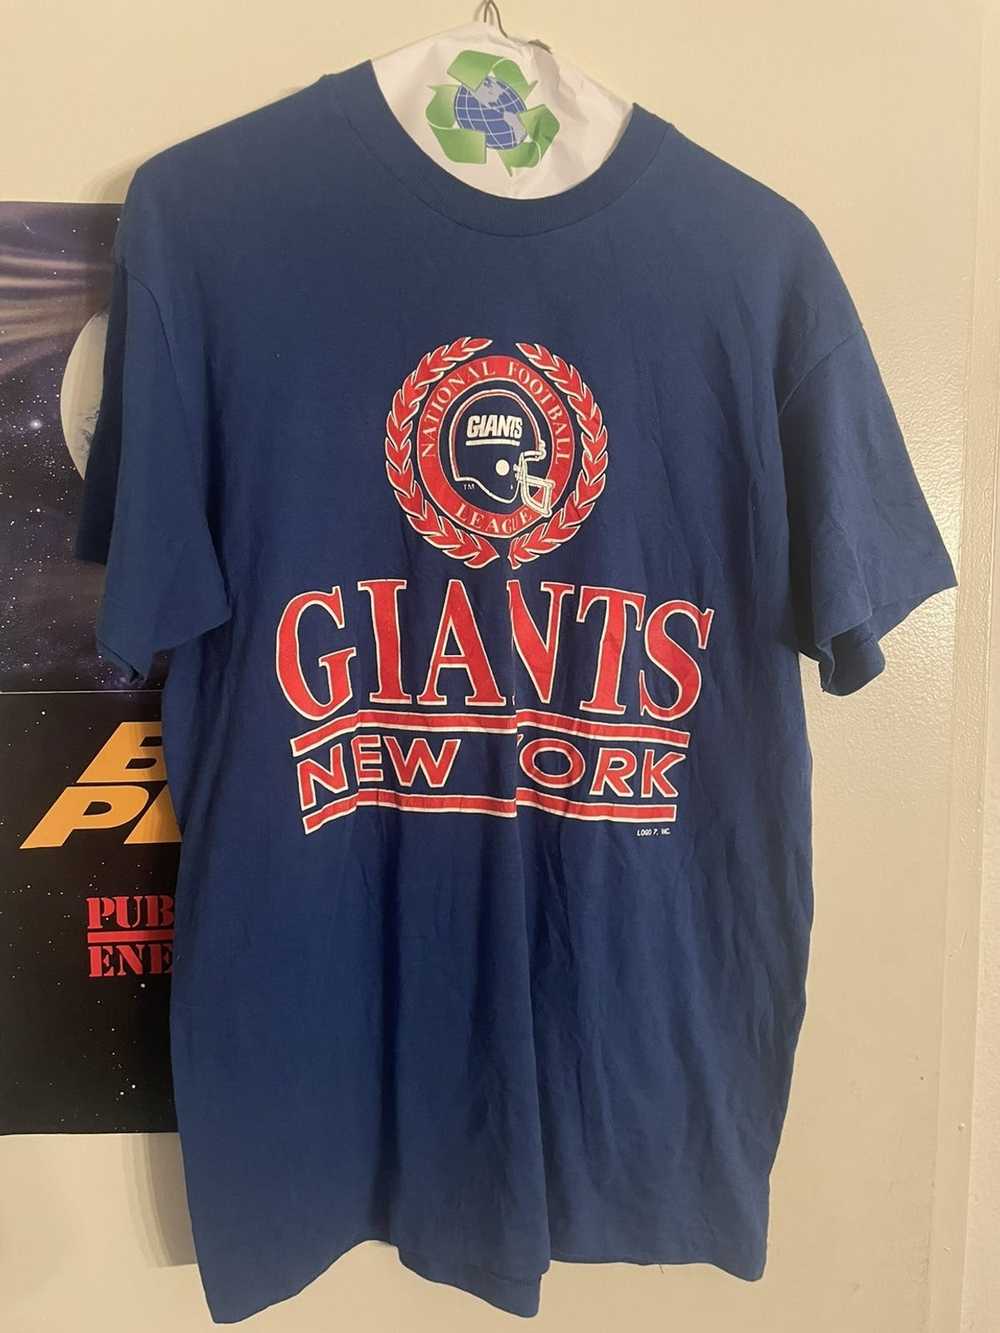 Vintage Vintage New York Giants Tee - image 1